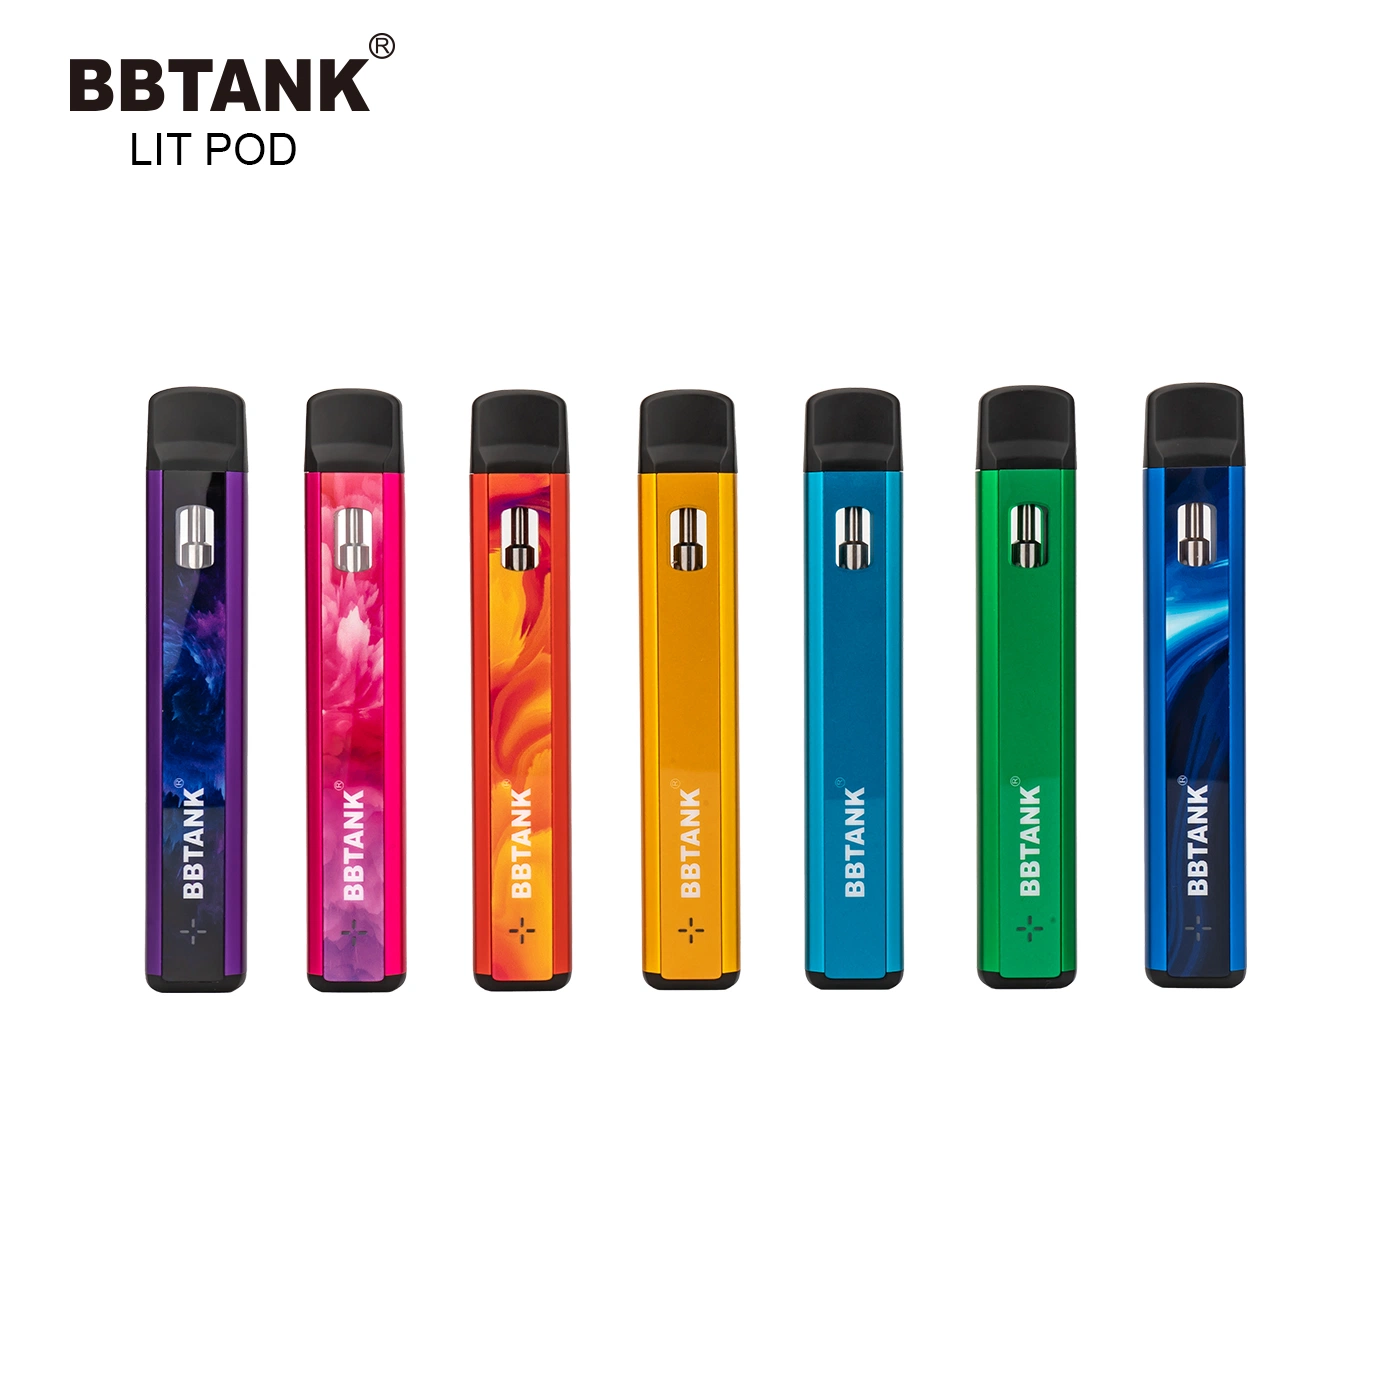 Bbtank vender más calientes del dispositivo de la vaina del cartucho 1ml vaporizador Vape Pen